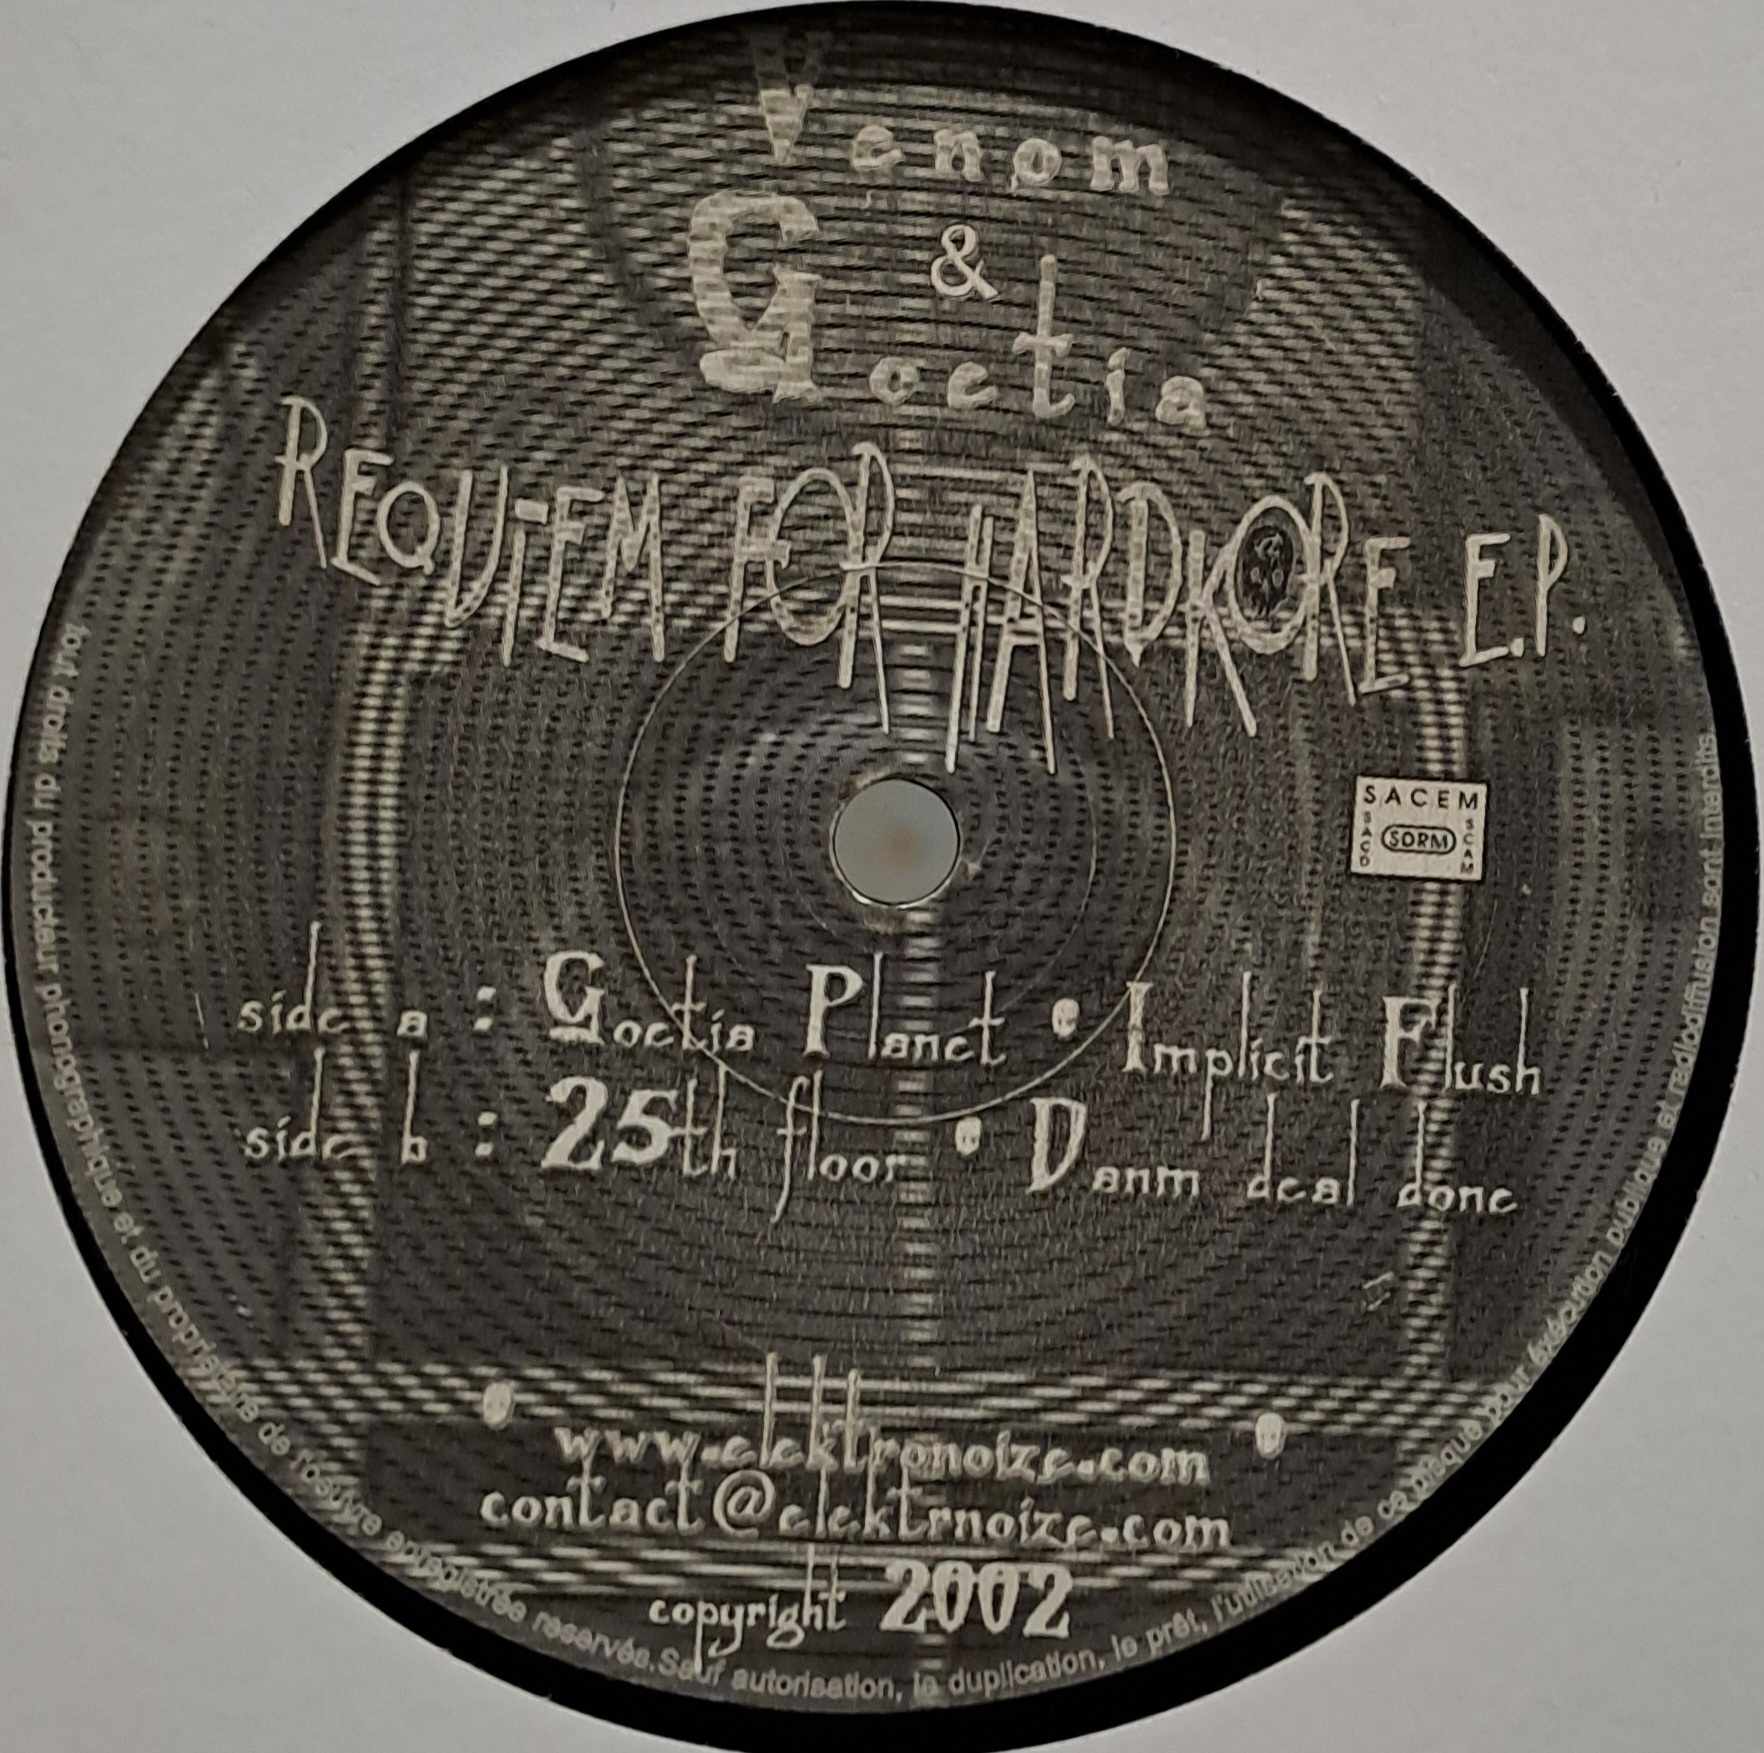 Elektrokut 01 - vinyle hardcore